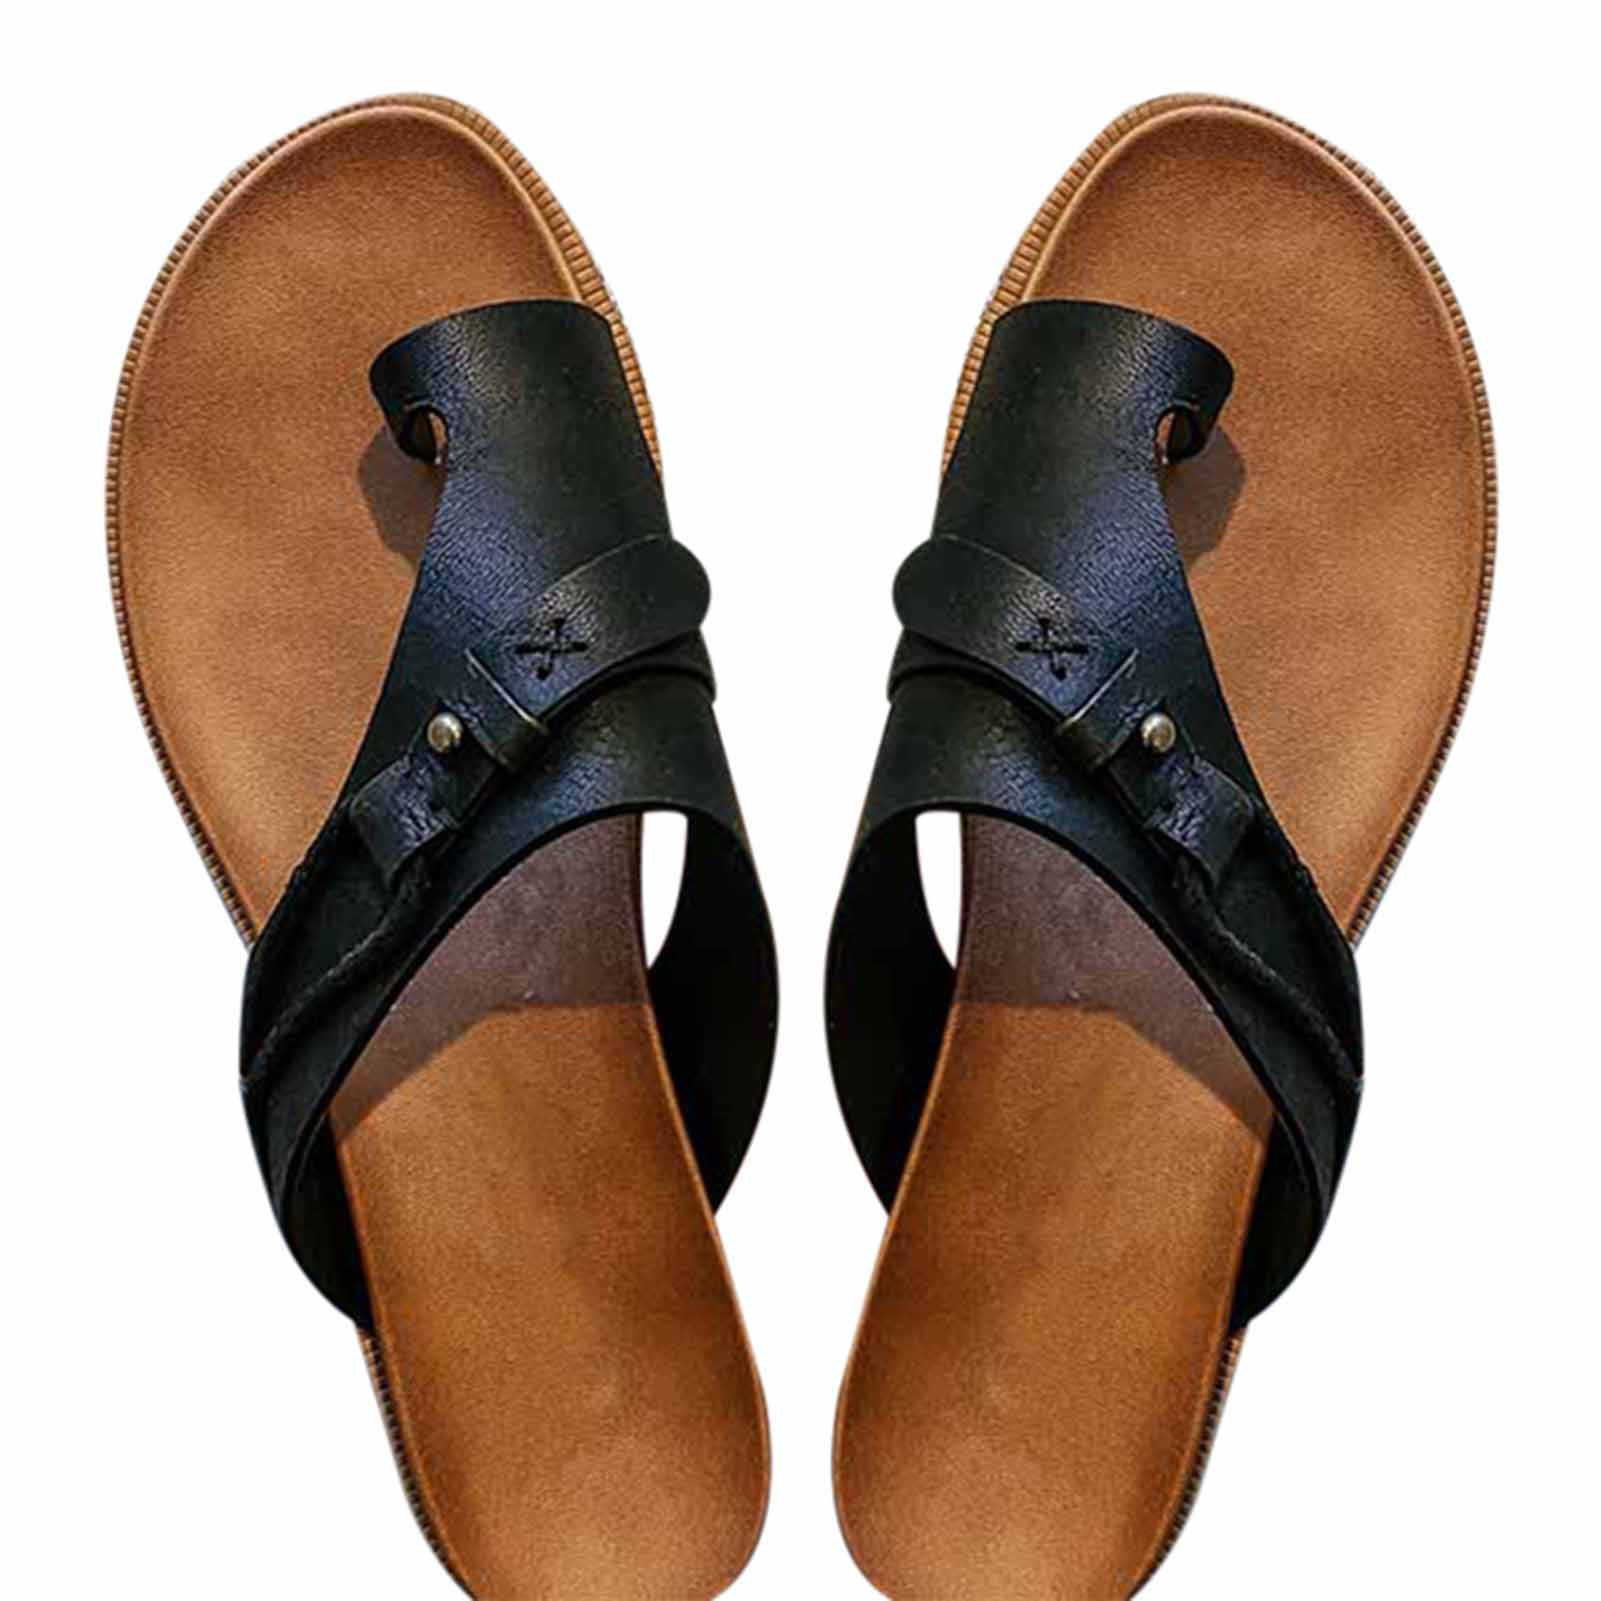 Carina Sandals Women s Open Toe Slippers Flat Heel Flip Flops with EVA Sole Summer Beach Shoes New 5ac70b8d 386e 4ab4 ac3f 59afc9807dd5.663011e7b6fdf938ba09913988aa9c5b